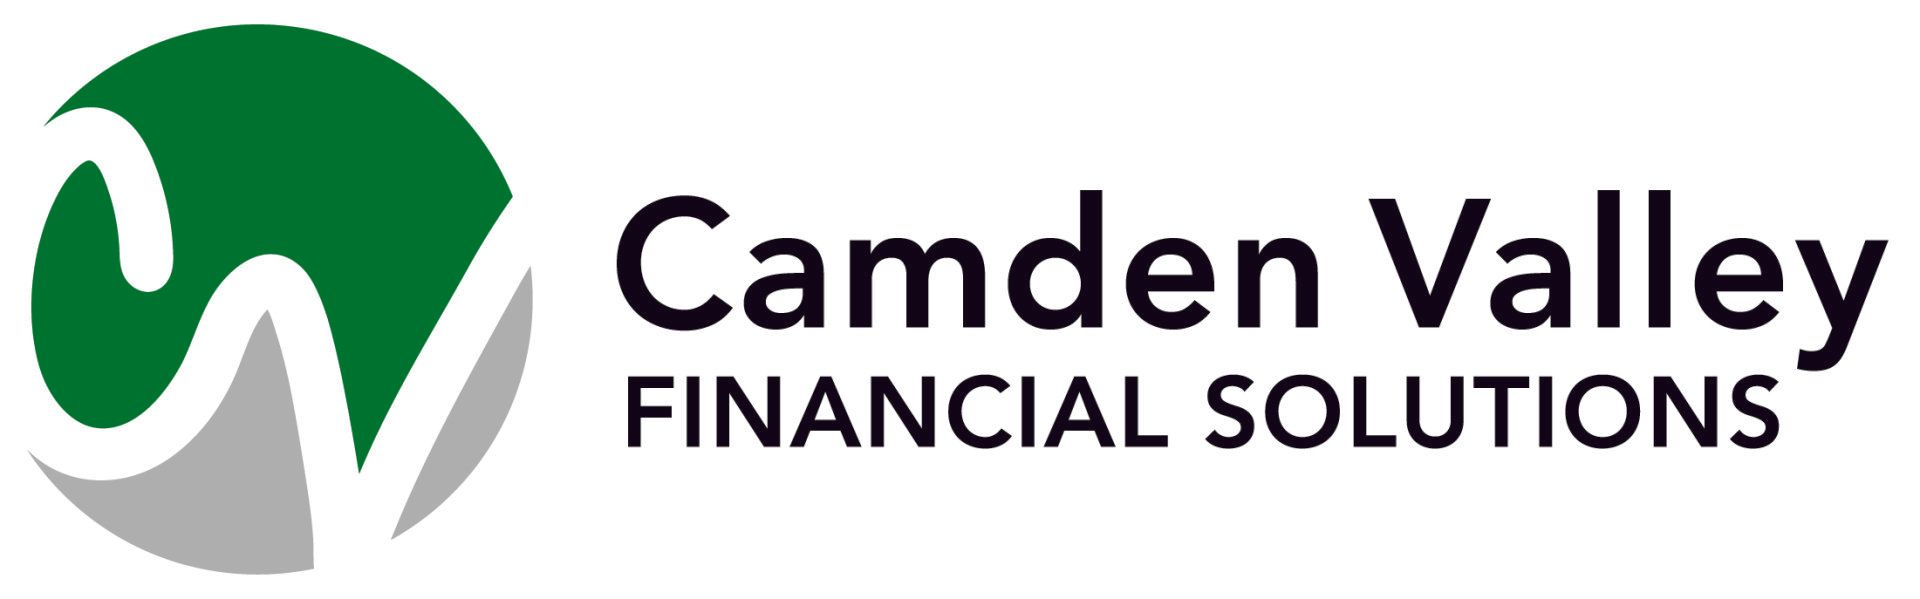 Camden Valley Financial Solutions Pty Ltd